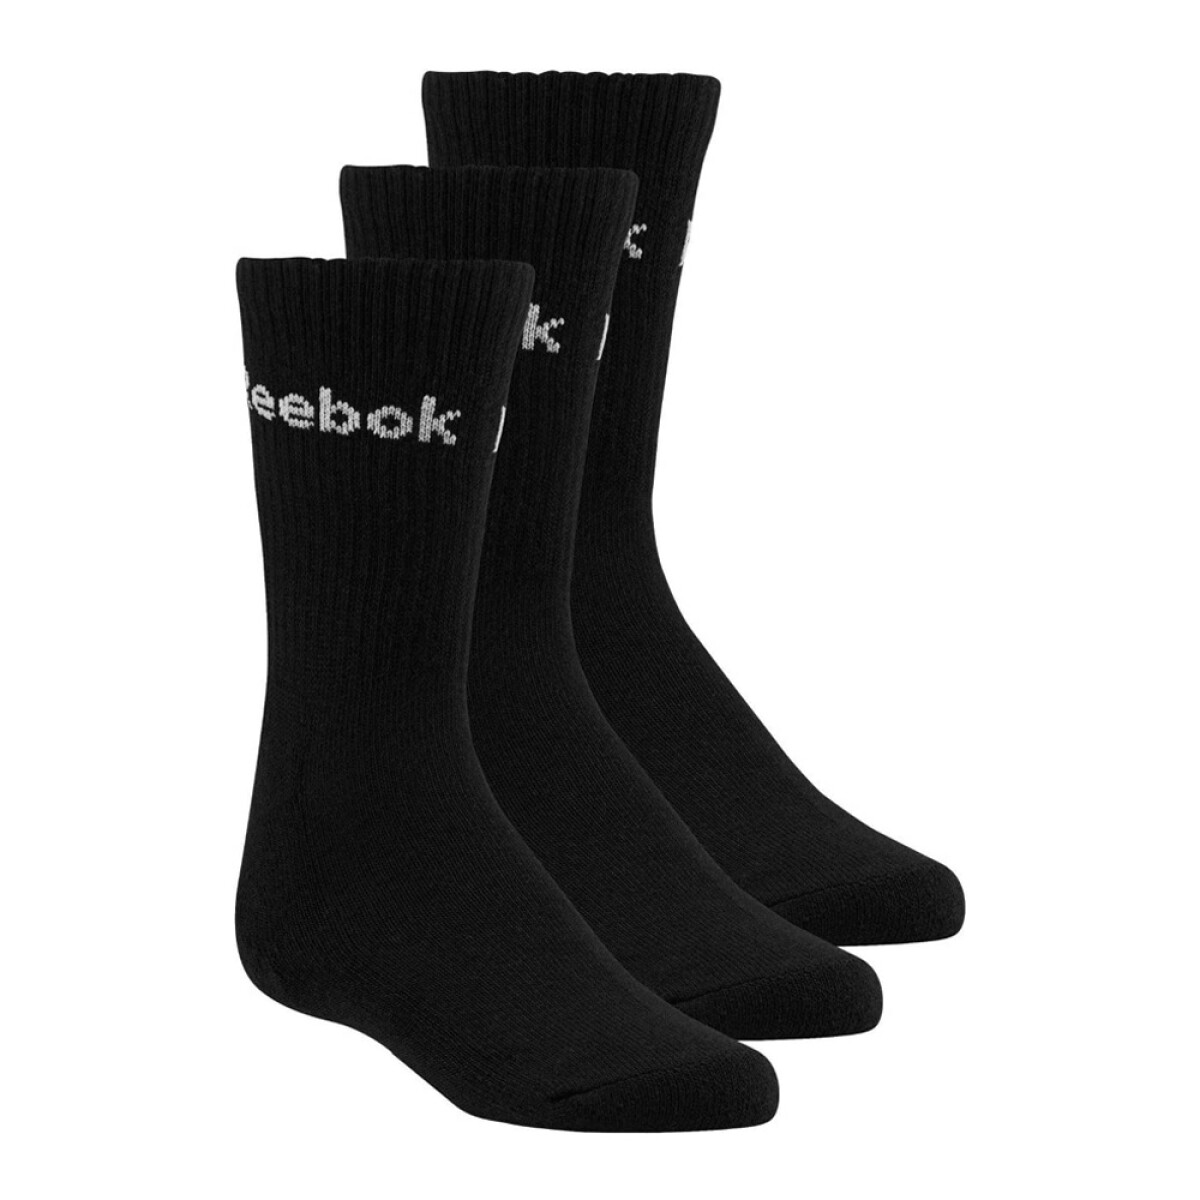 Medias Deportivas Unisex Altas Reebok Crew Sock Pack X3 - Negro 